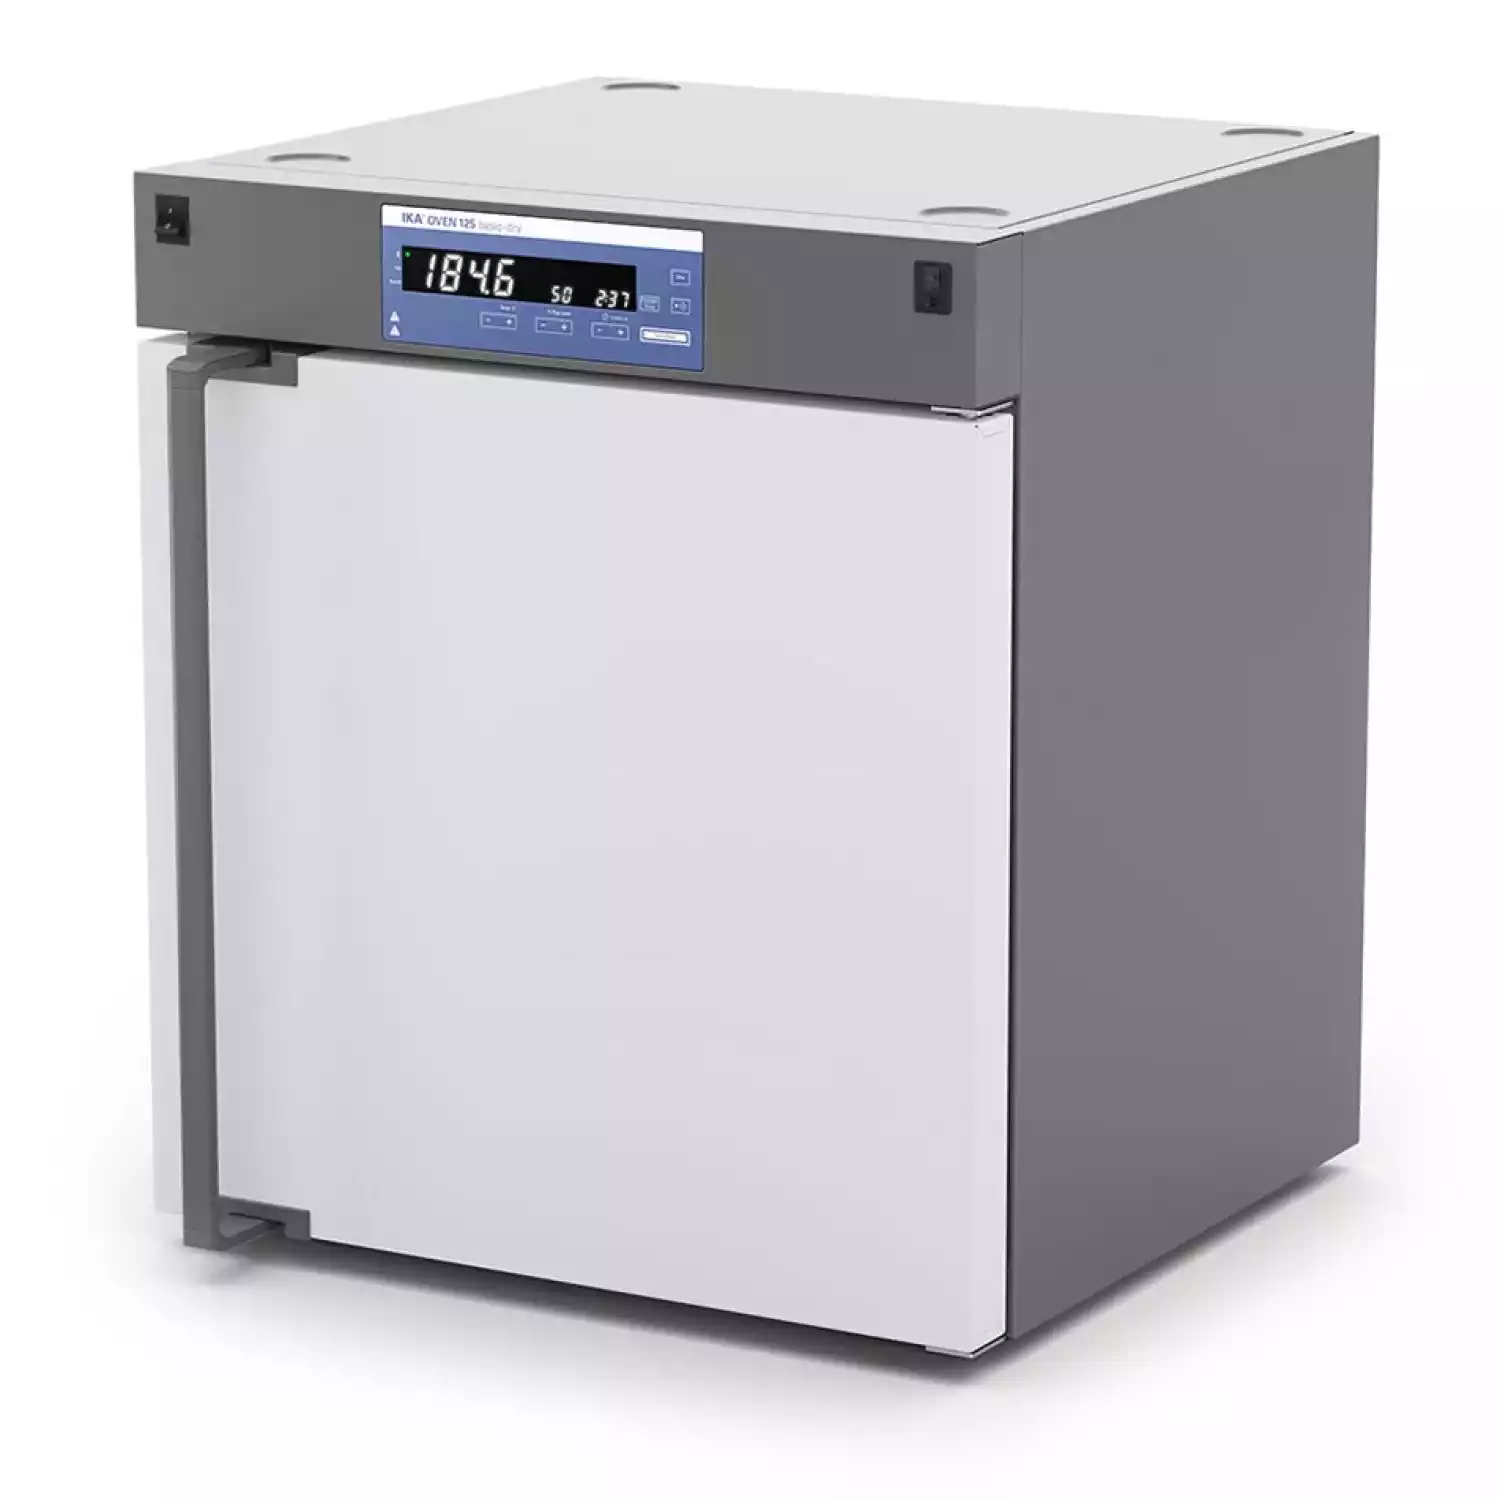 Сушильный шкаф IKA Oven 125 basic dry - 1